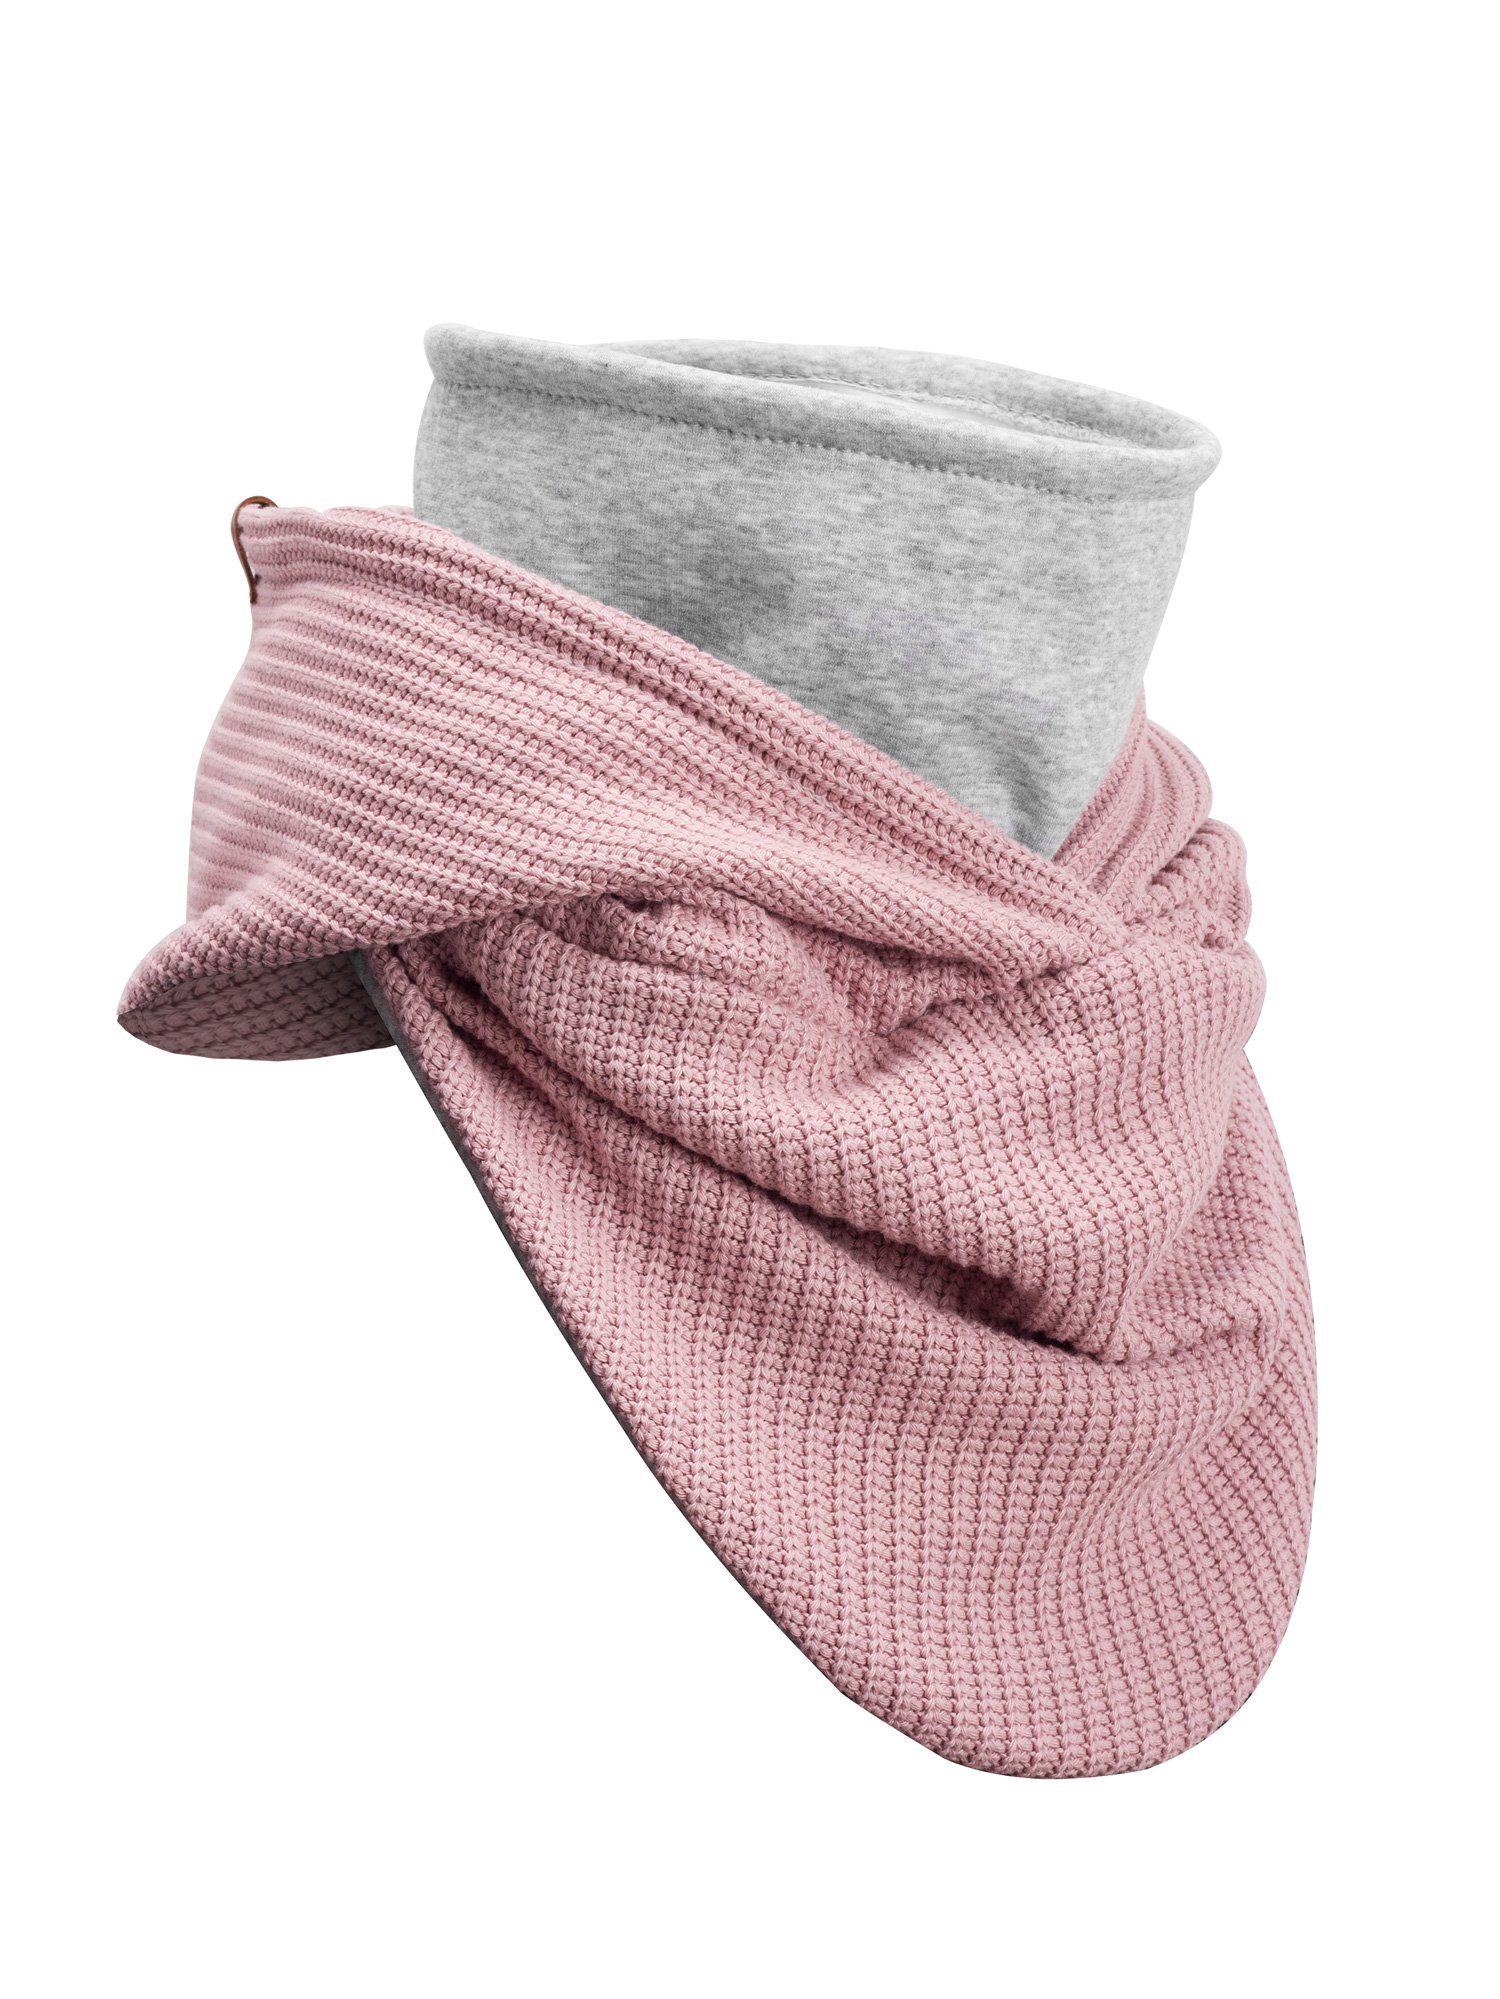 Manufaktur13 Modeschal Knit Hooded Loop - Kapuzenschal, Schal, Strickschal, mit integriertem Windbreaker Rose